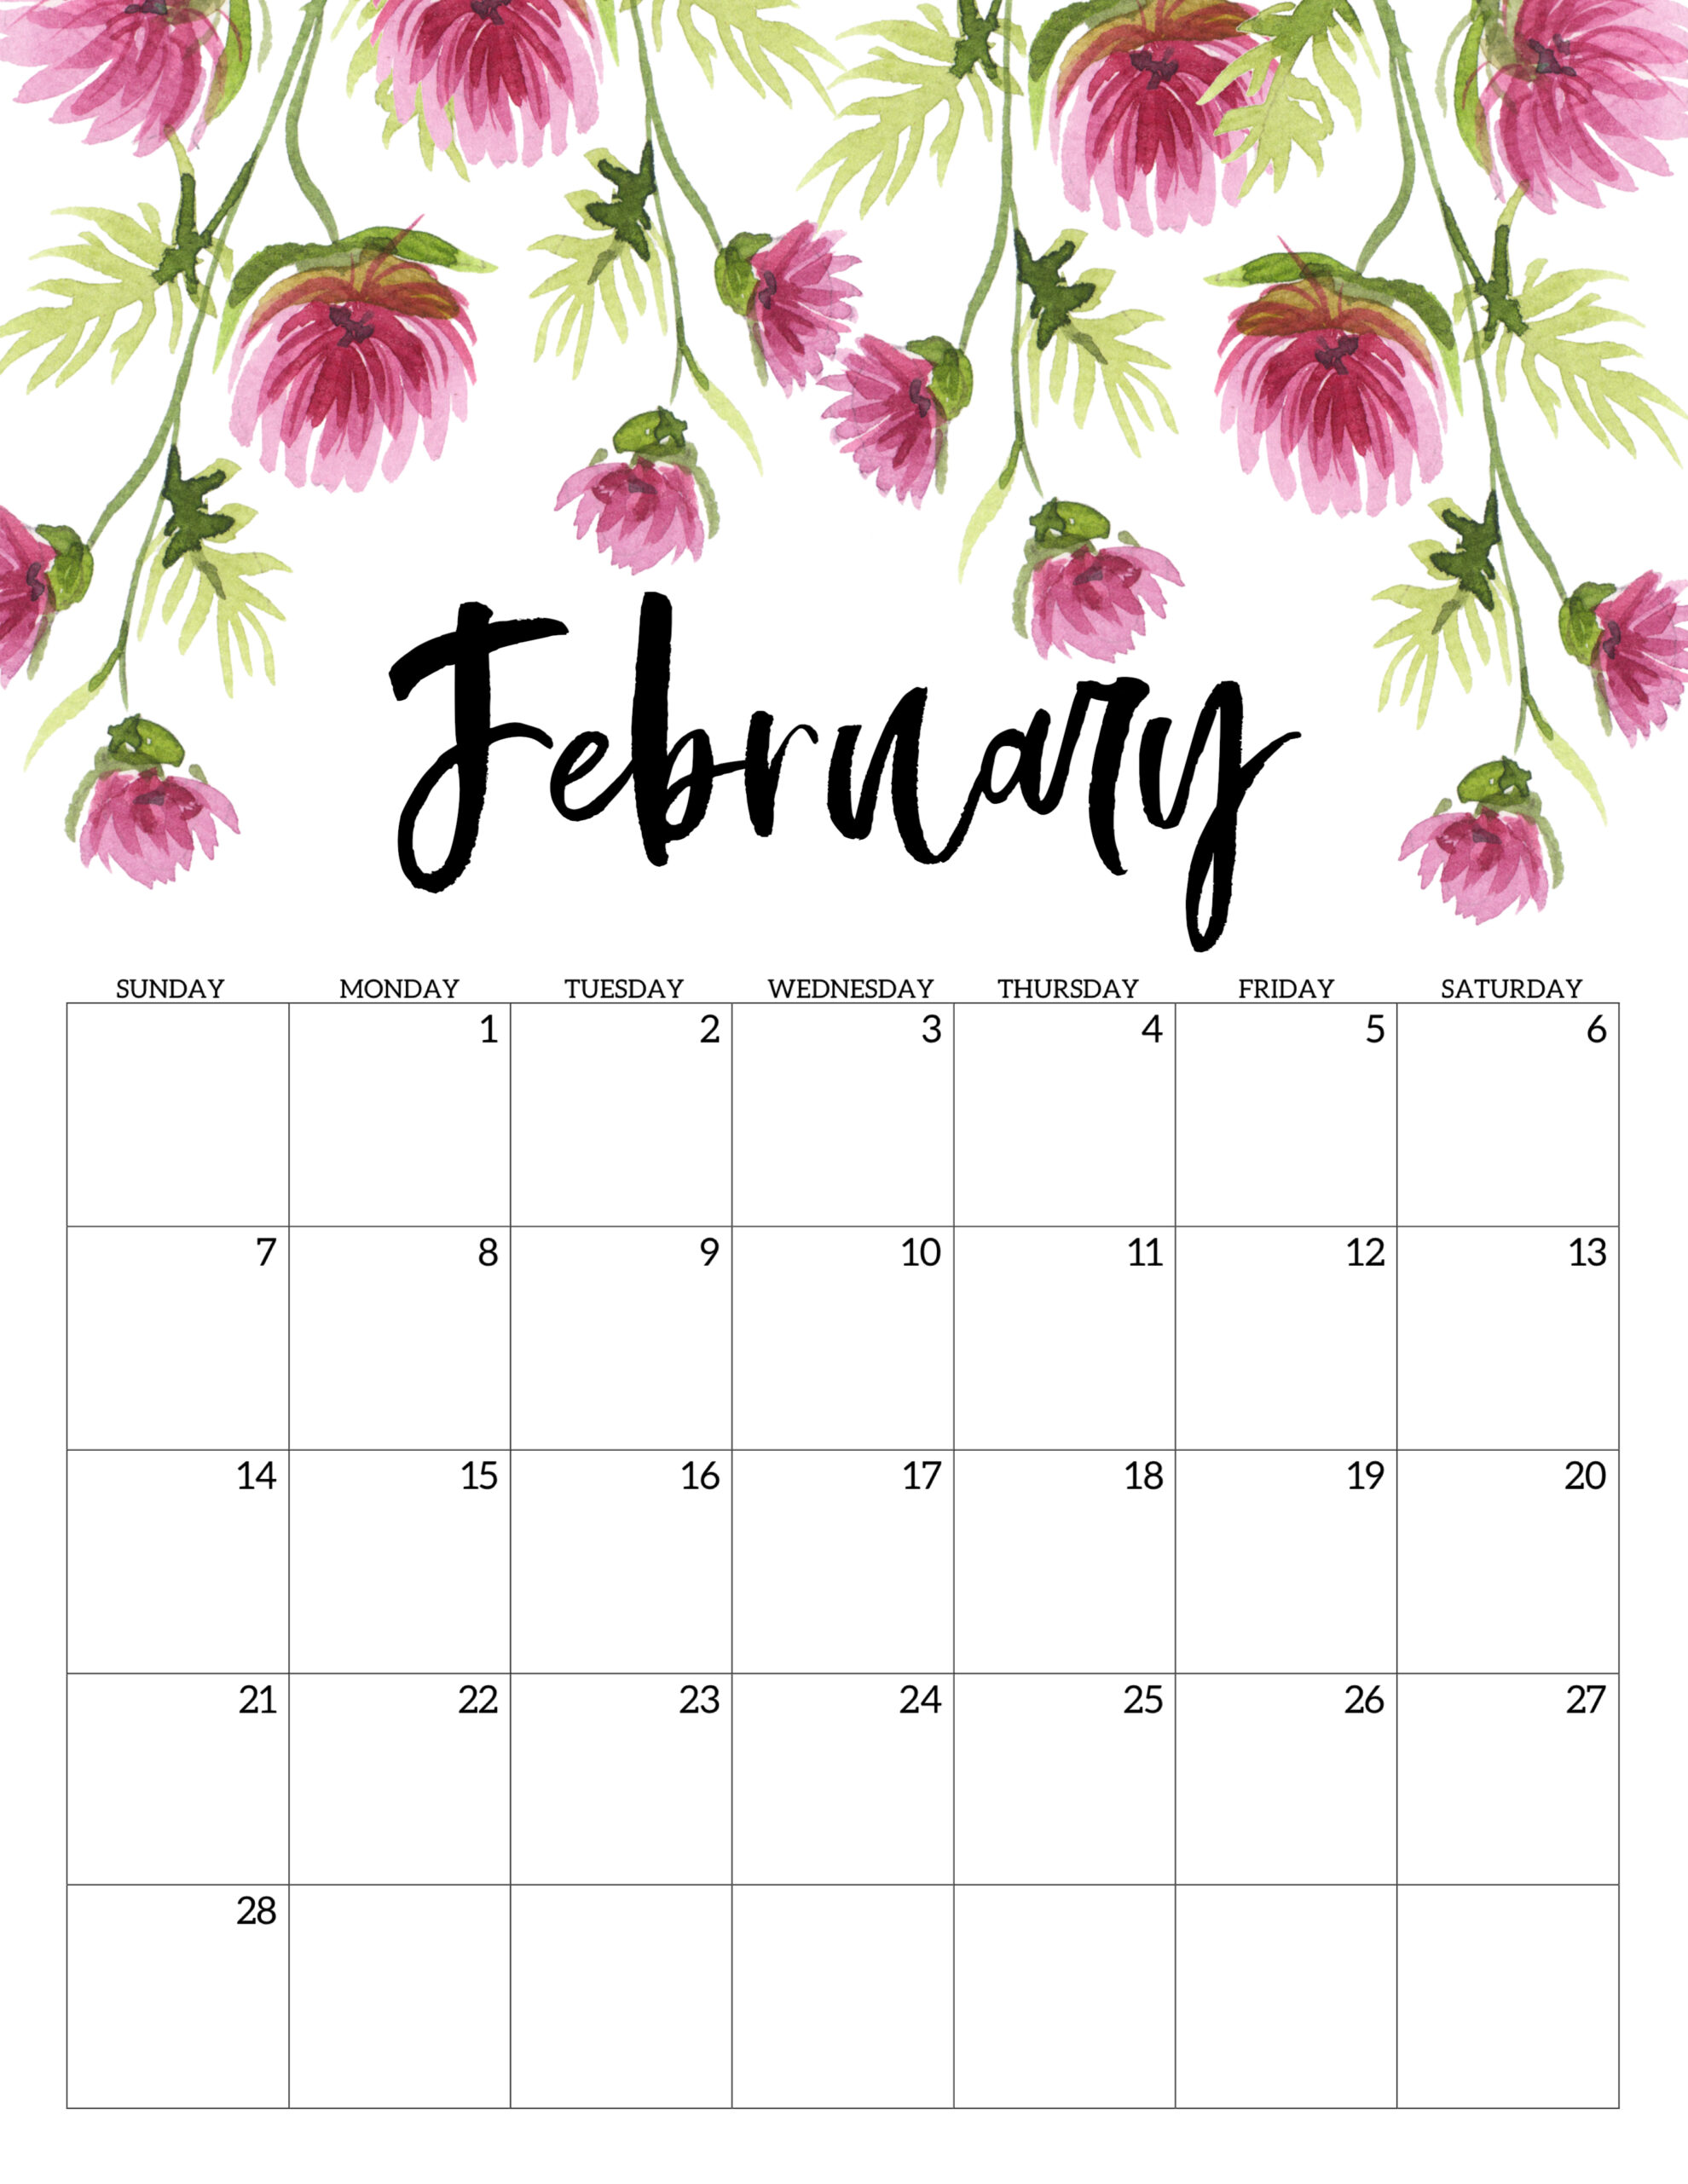 February 2021 Calendar For Kids Calendar 2021